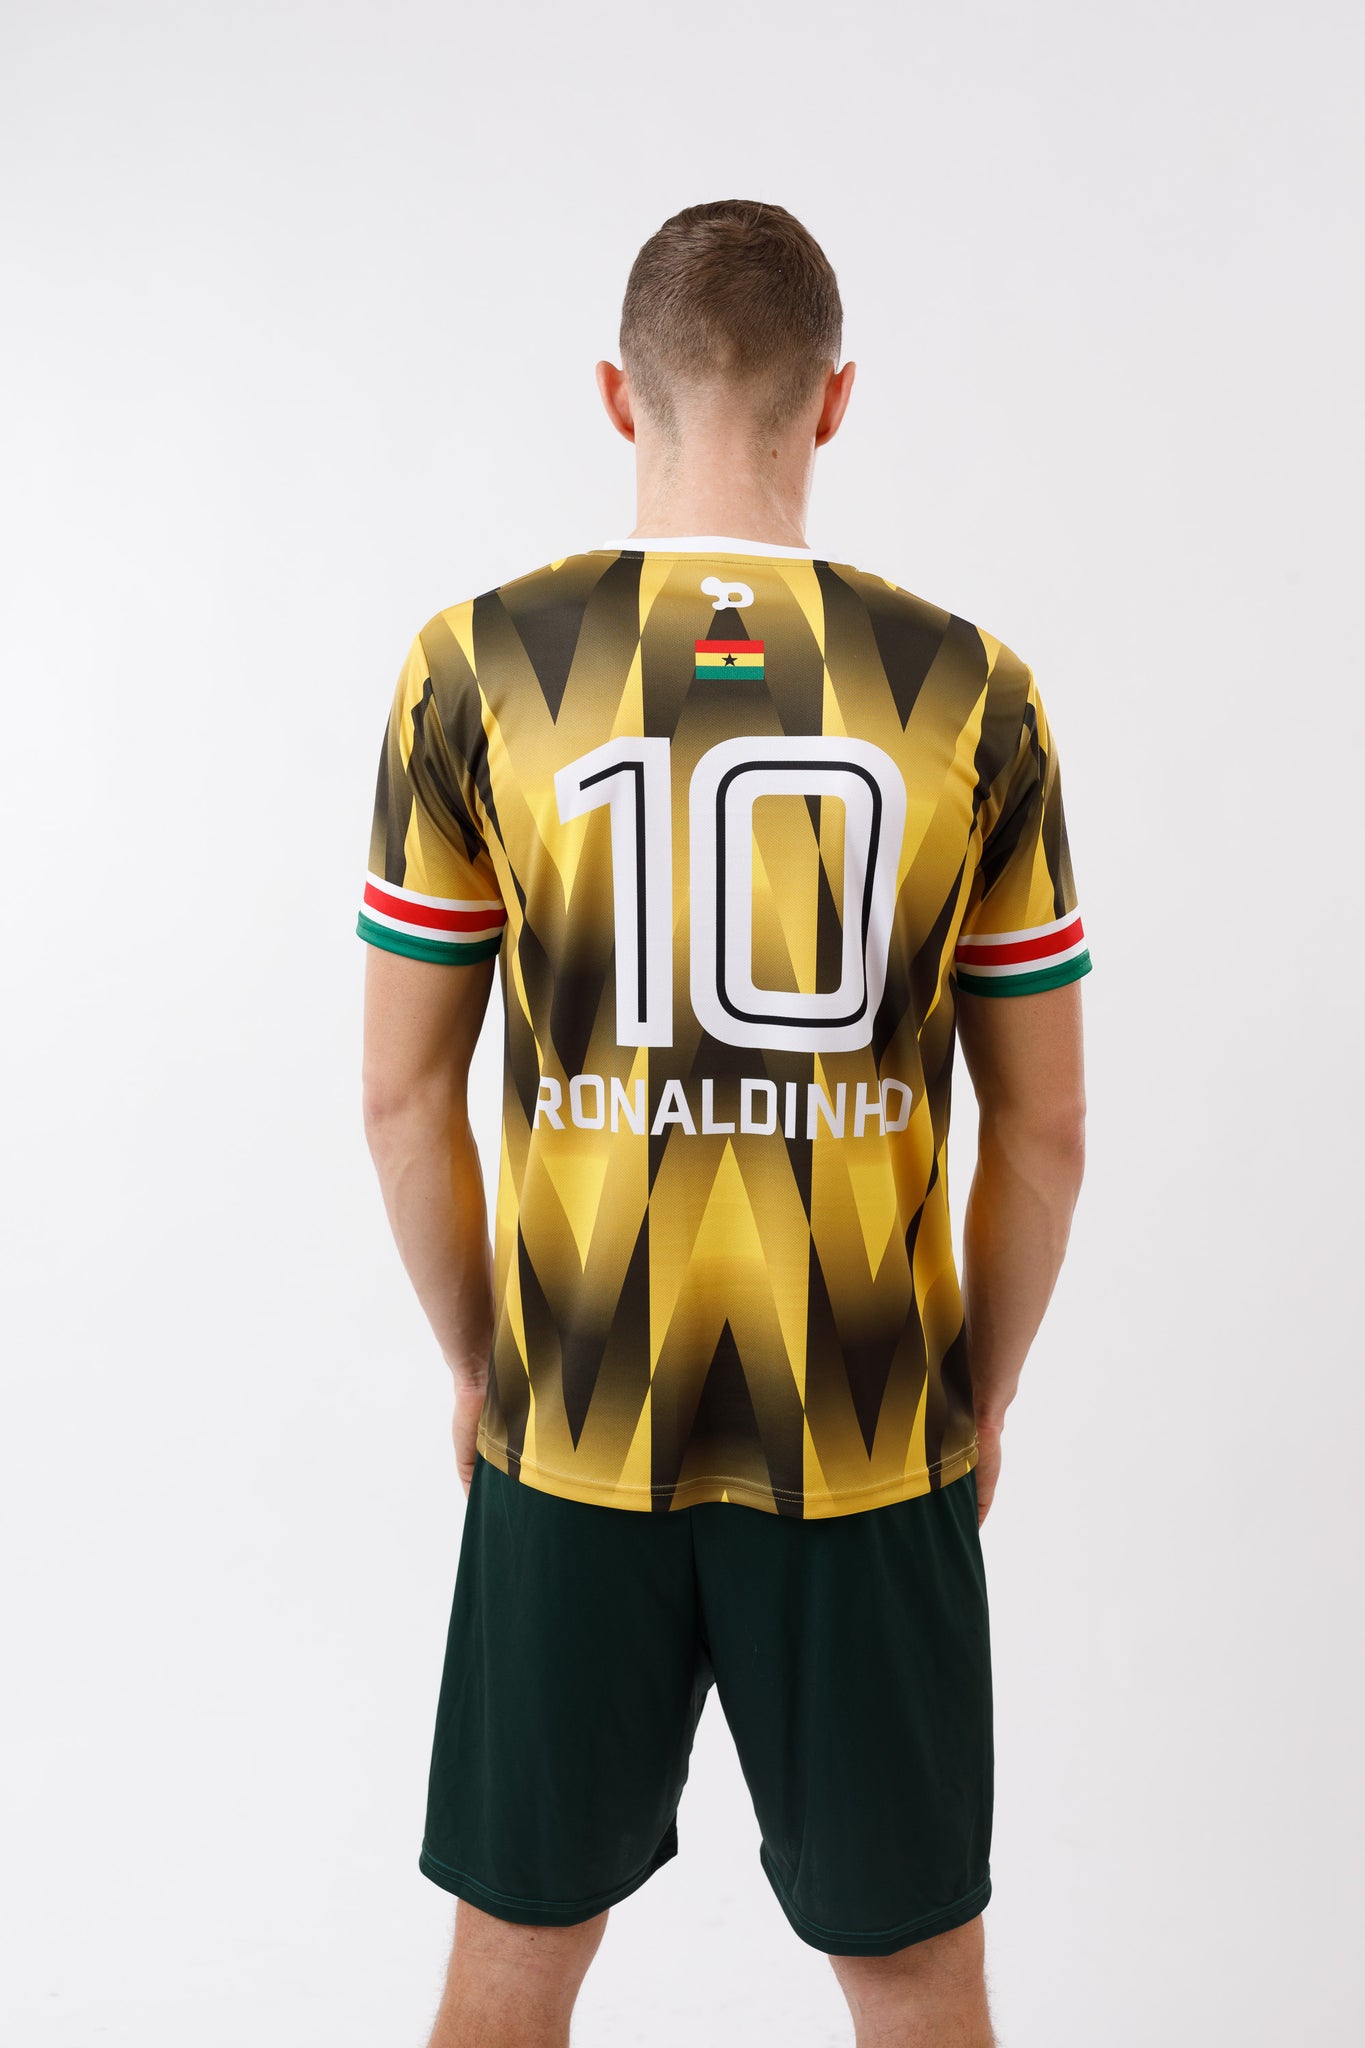 Ronaldinho Ghana Jersey/Camisa